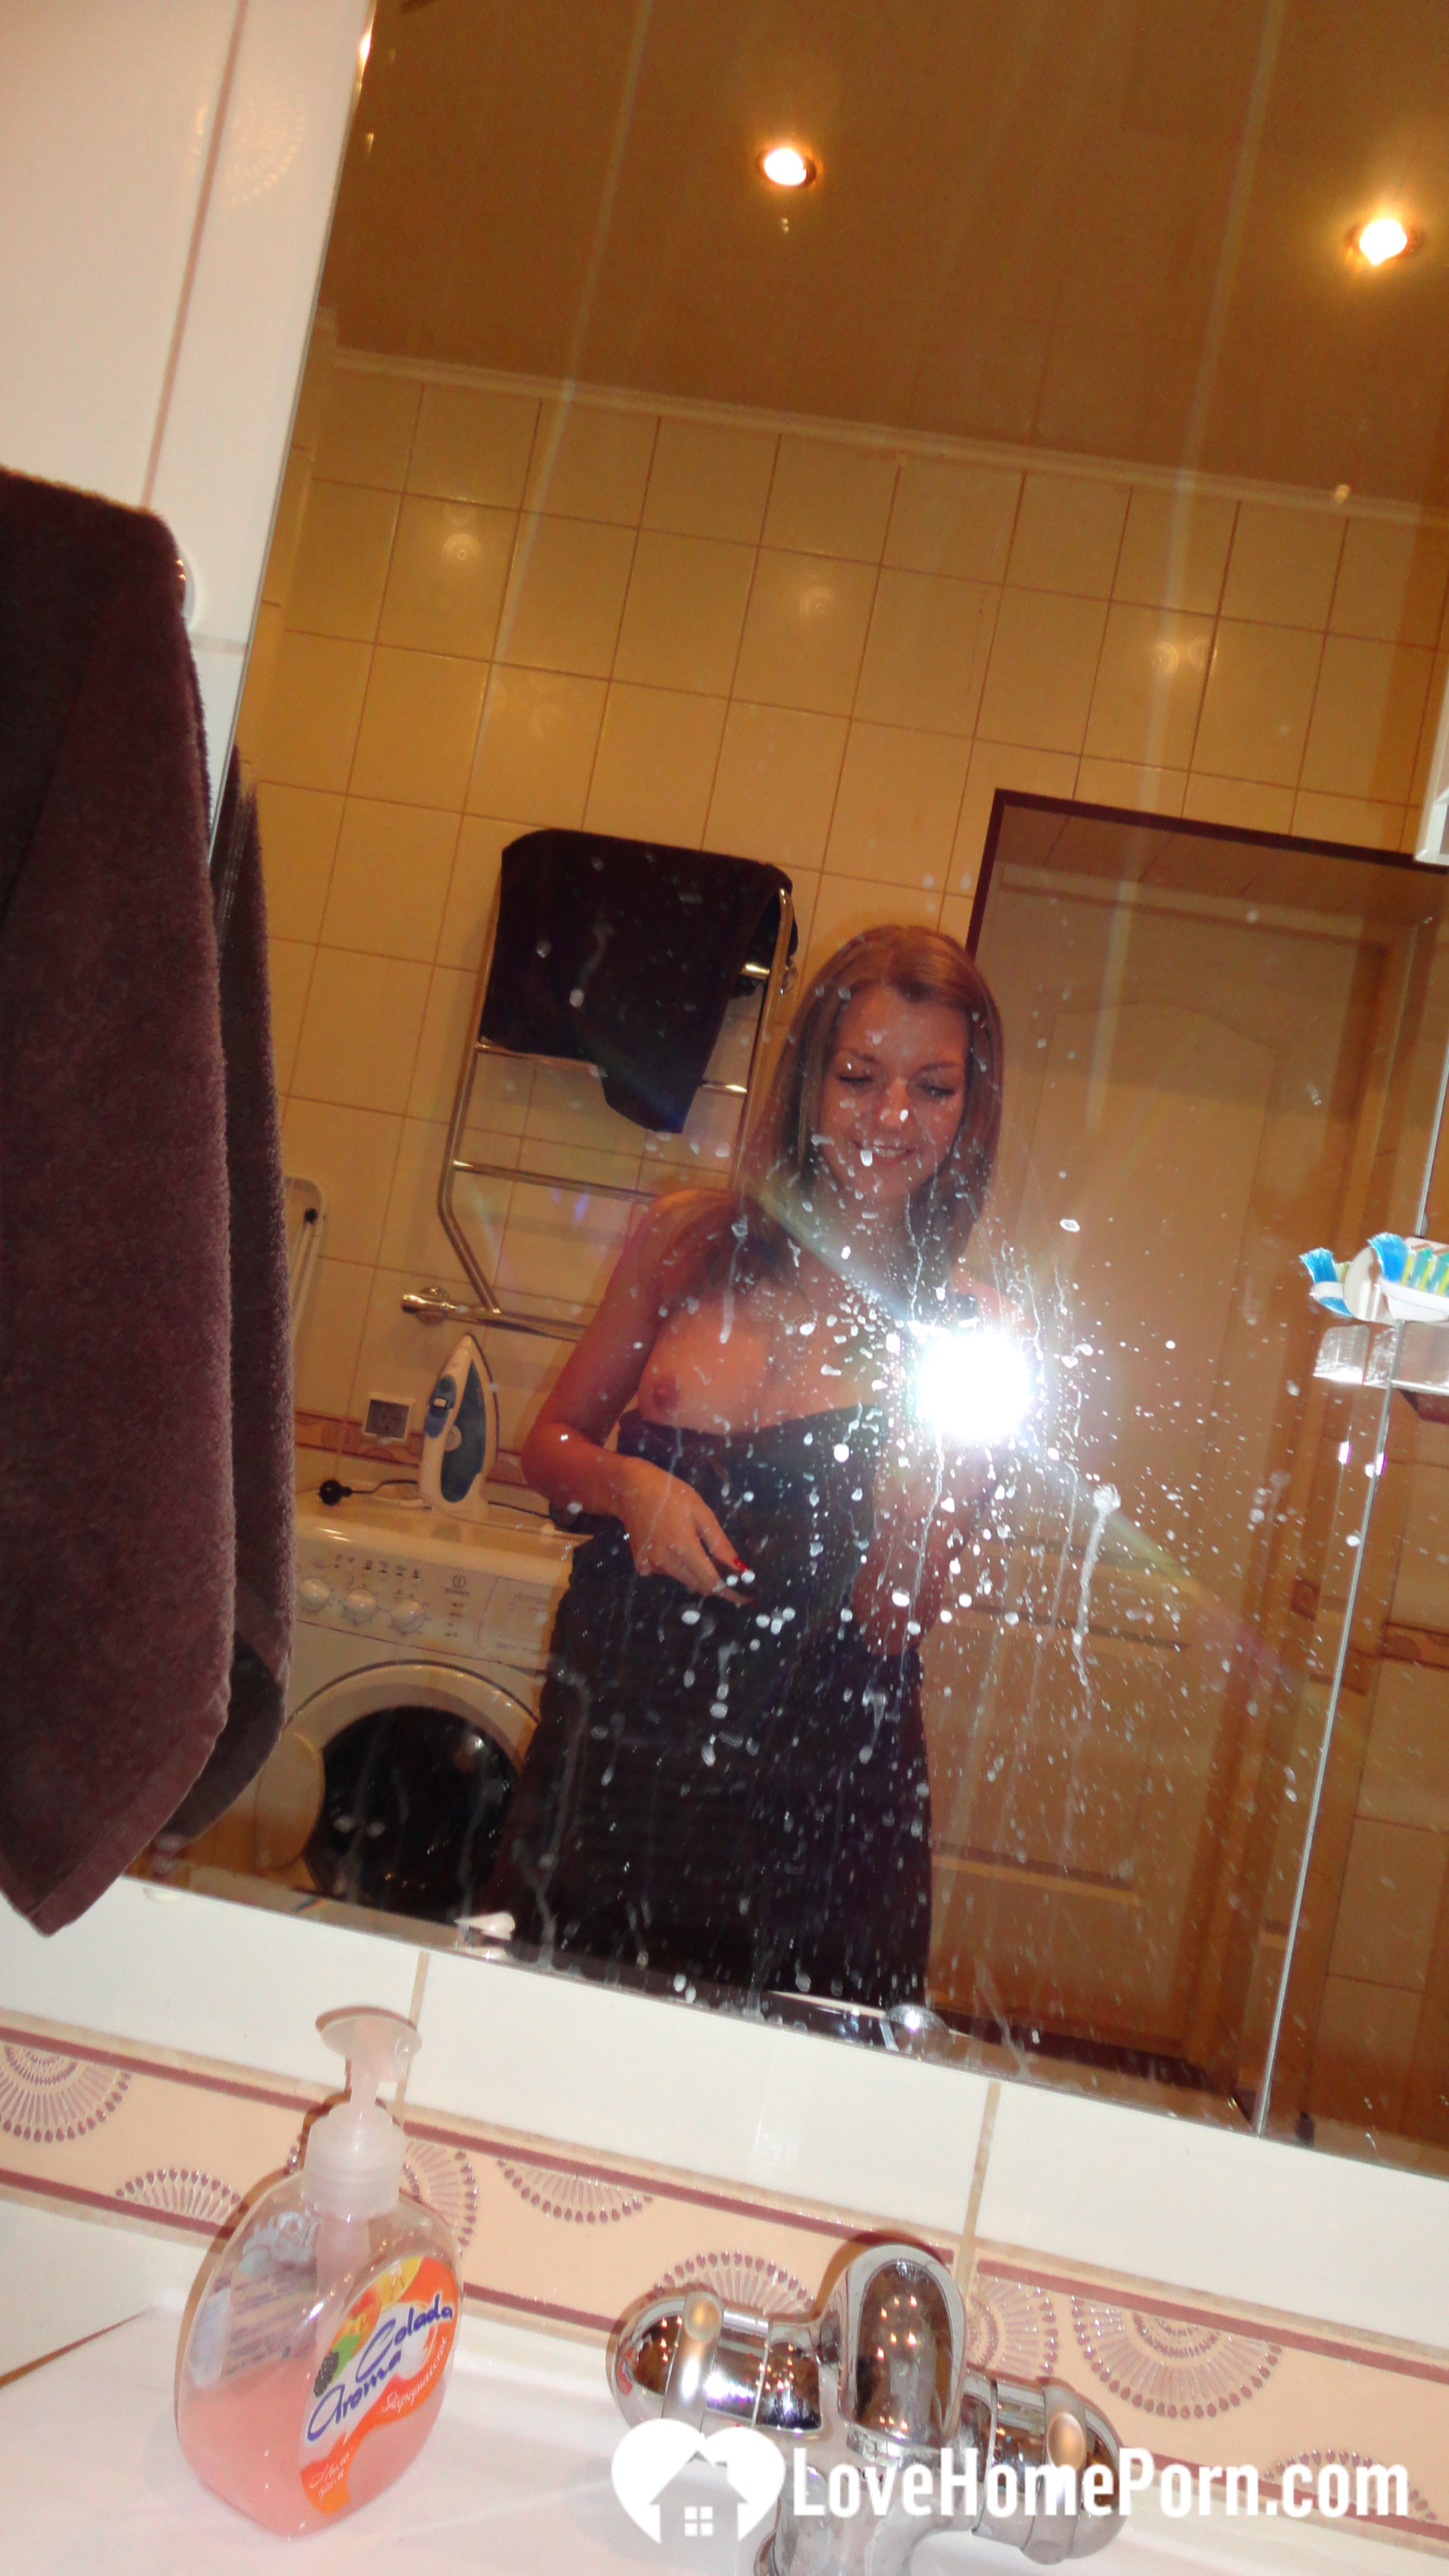 Amateur brunette babe taking selfies before her shower